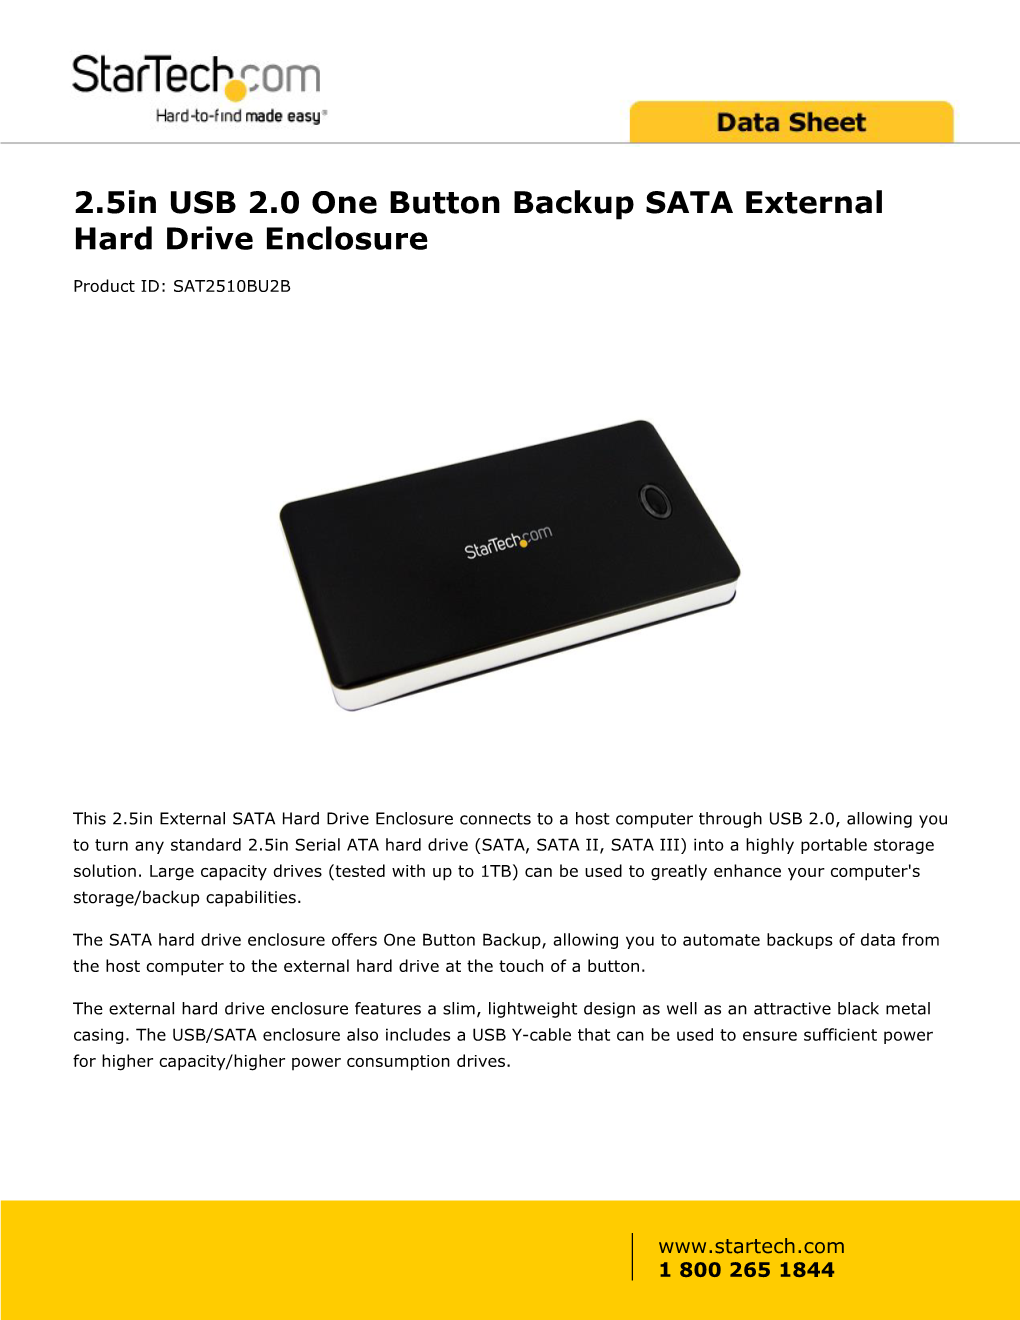 2.5In USB 2.0 One Button Backup SATA External Hard Drive Enclosure